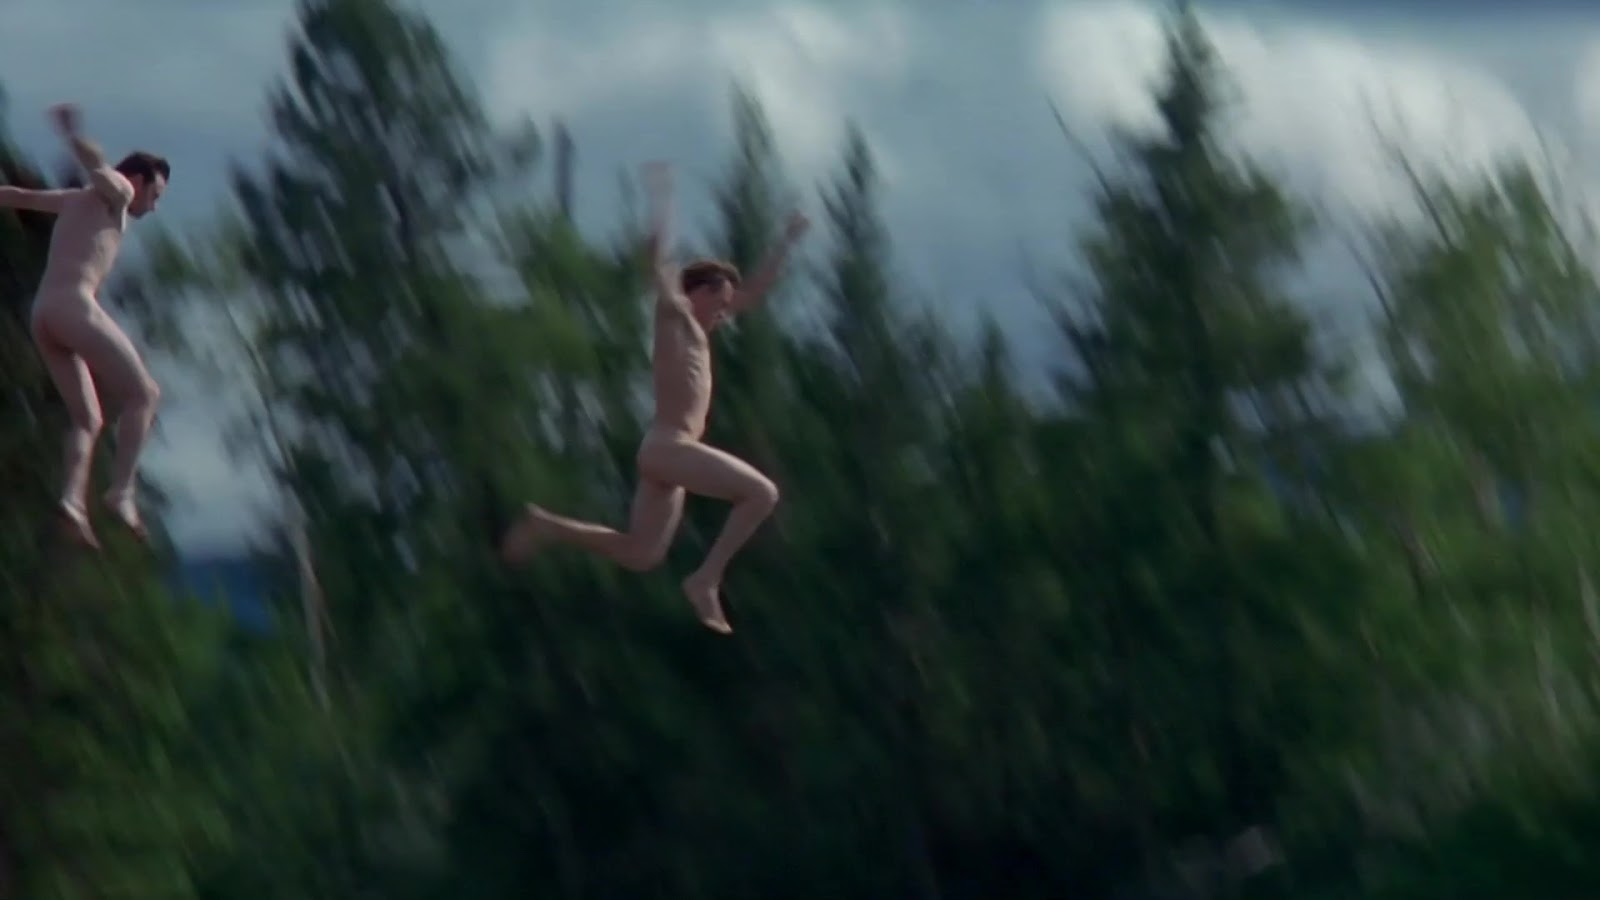 Jake Gyllenhaal and Heath Ledger nude in Brokeback Mountain.